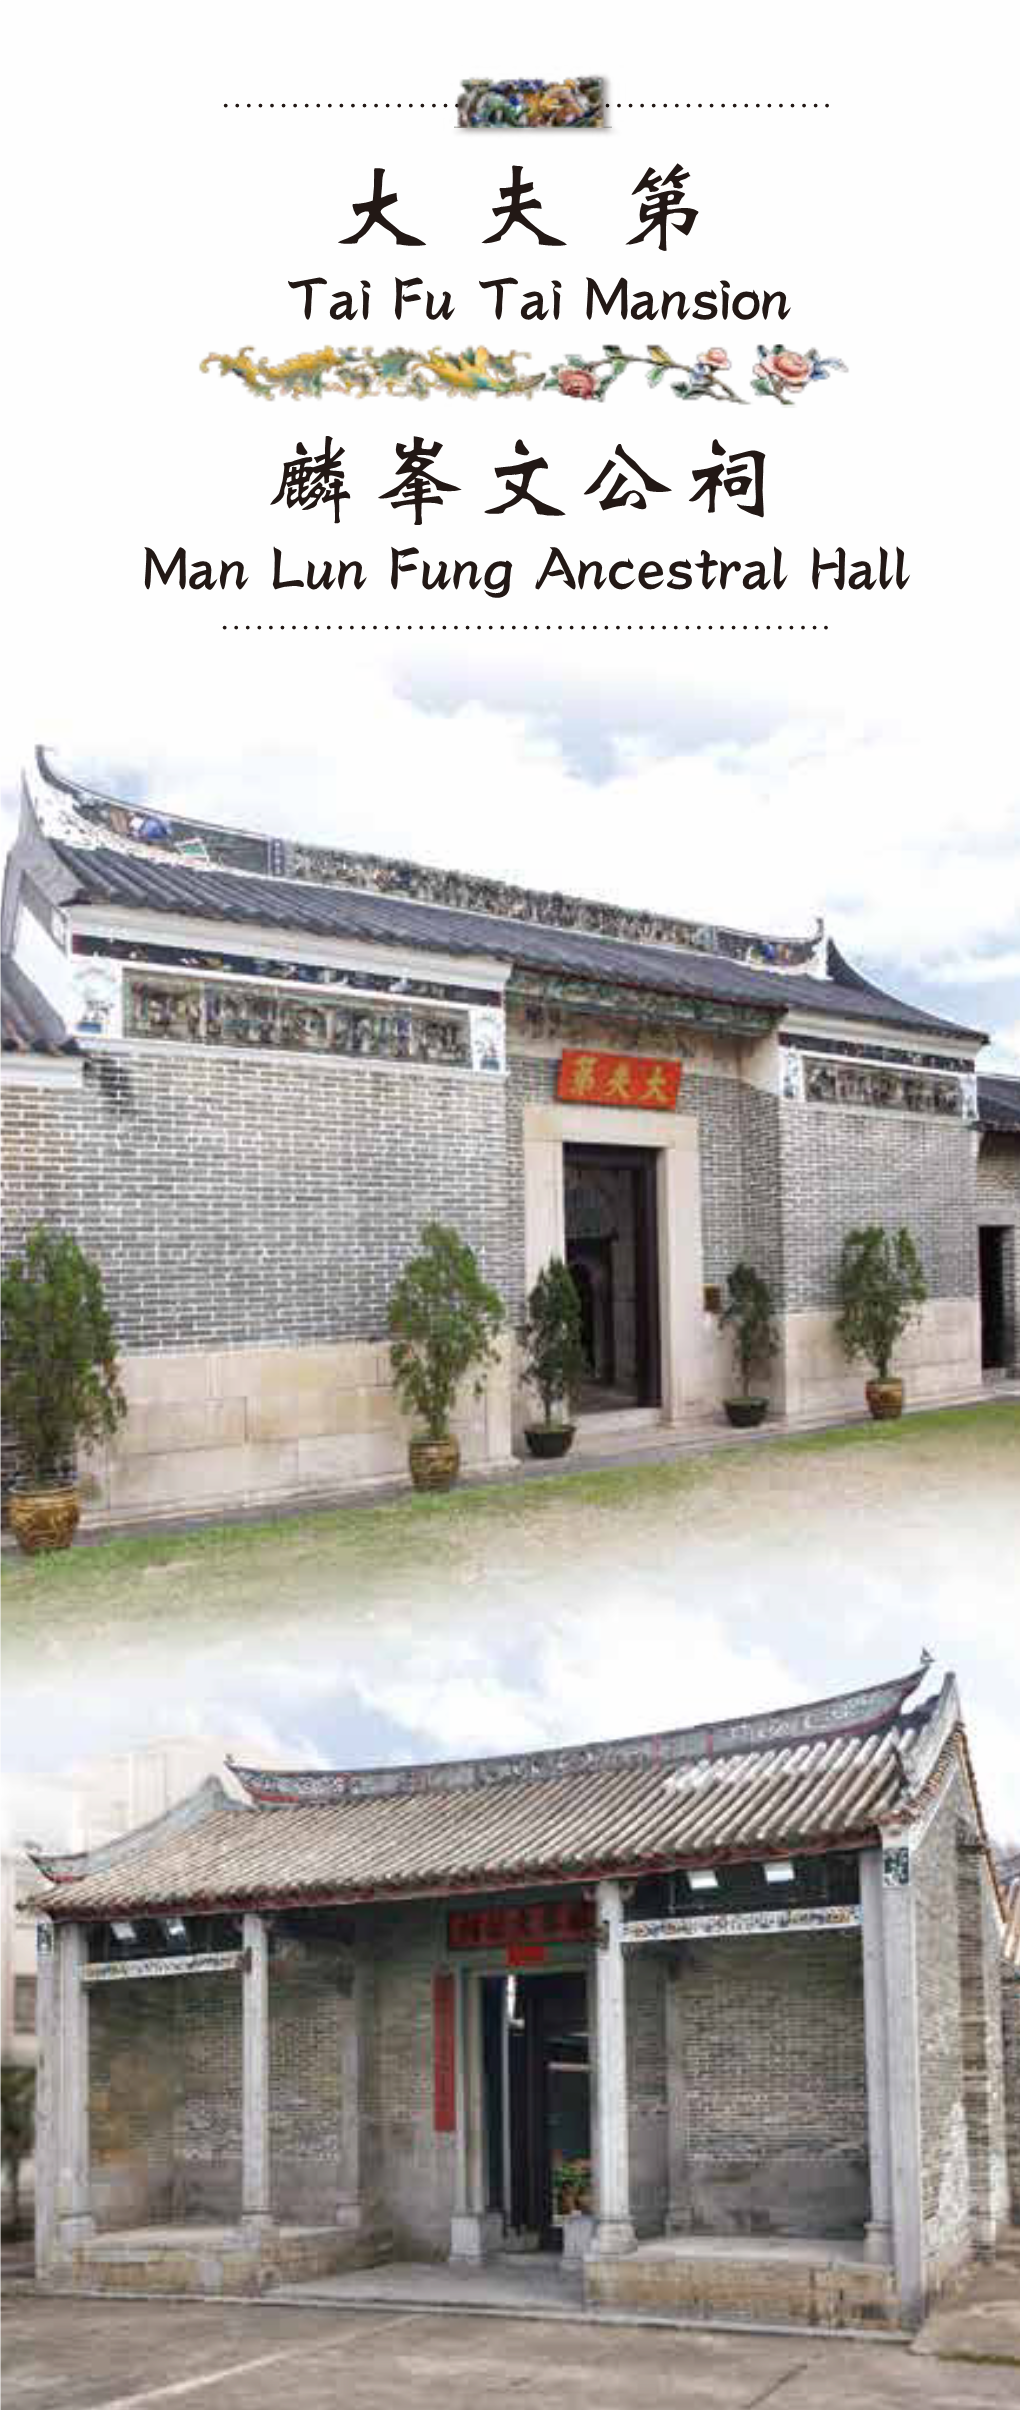 Tai Fu Tai Mansion and Man Lun Fung Ancestral Hall 大夫第、麟峯